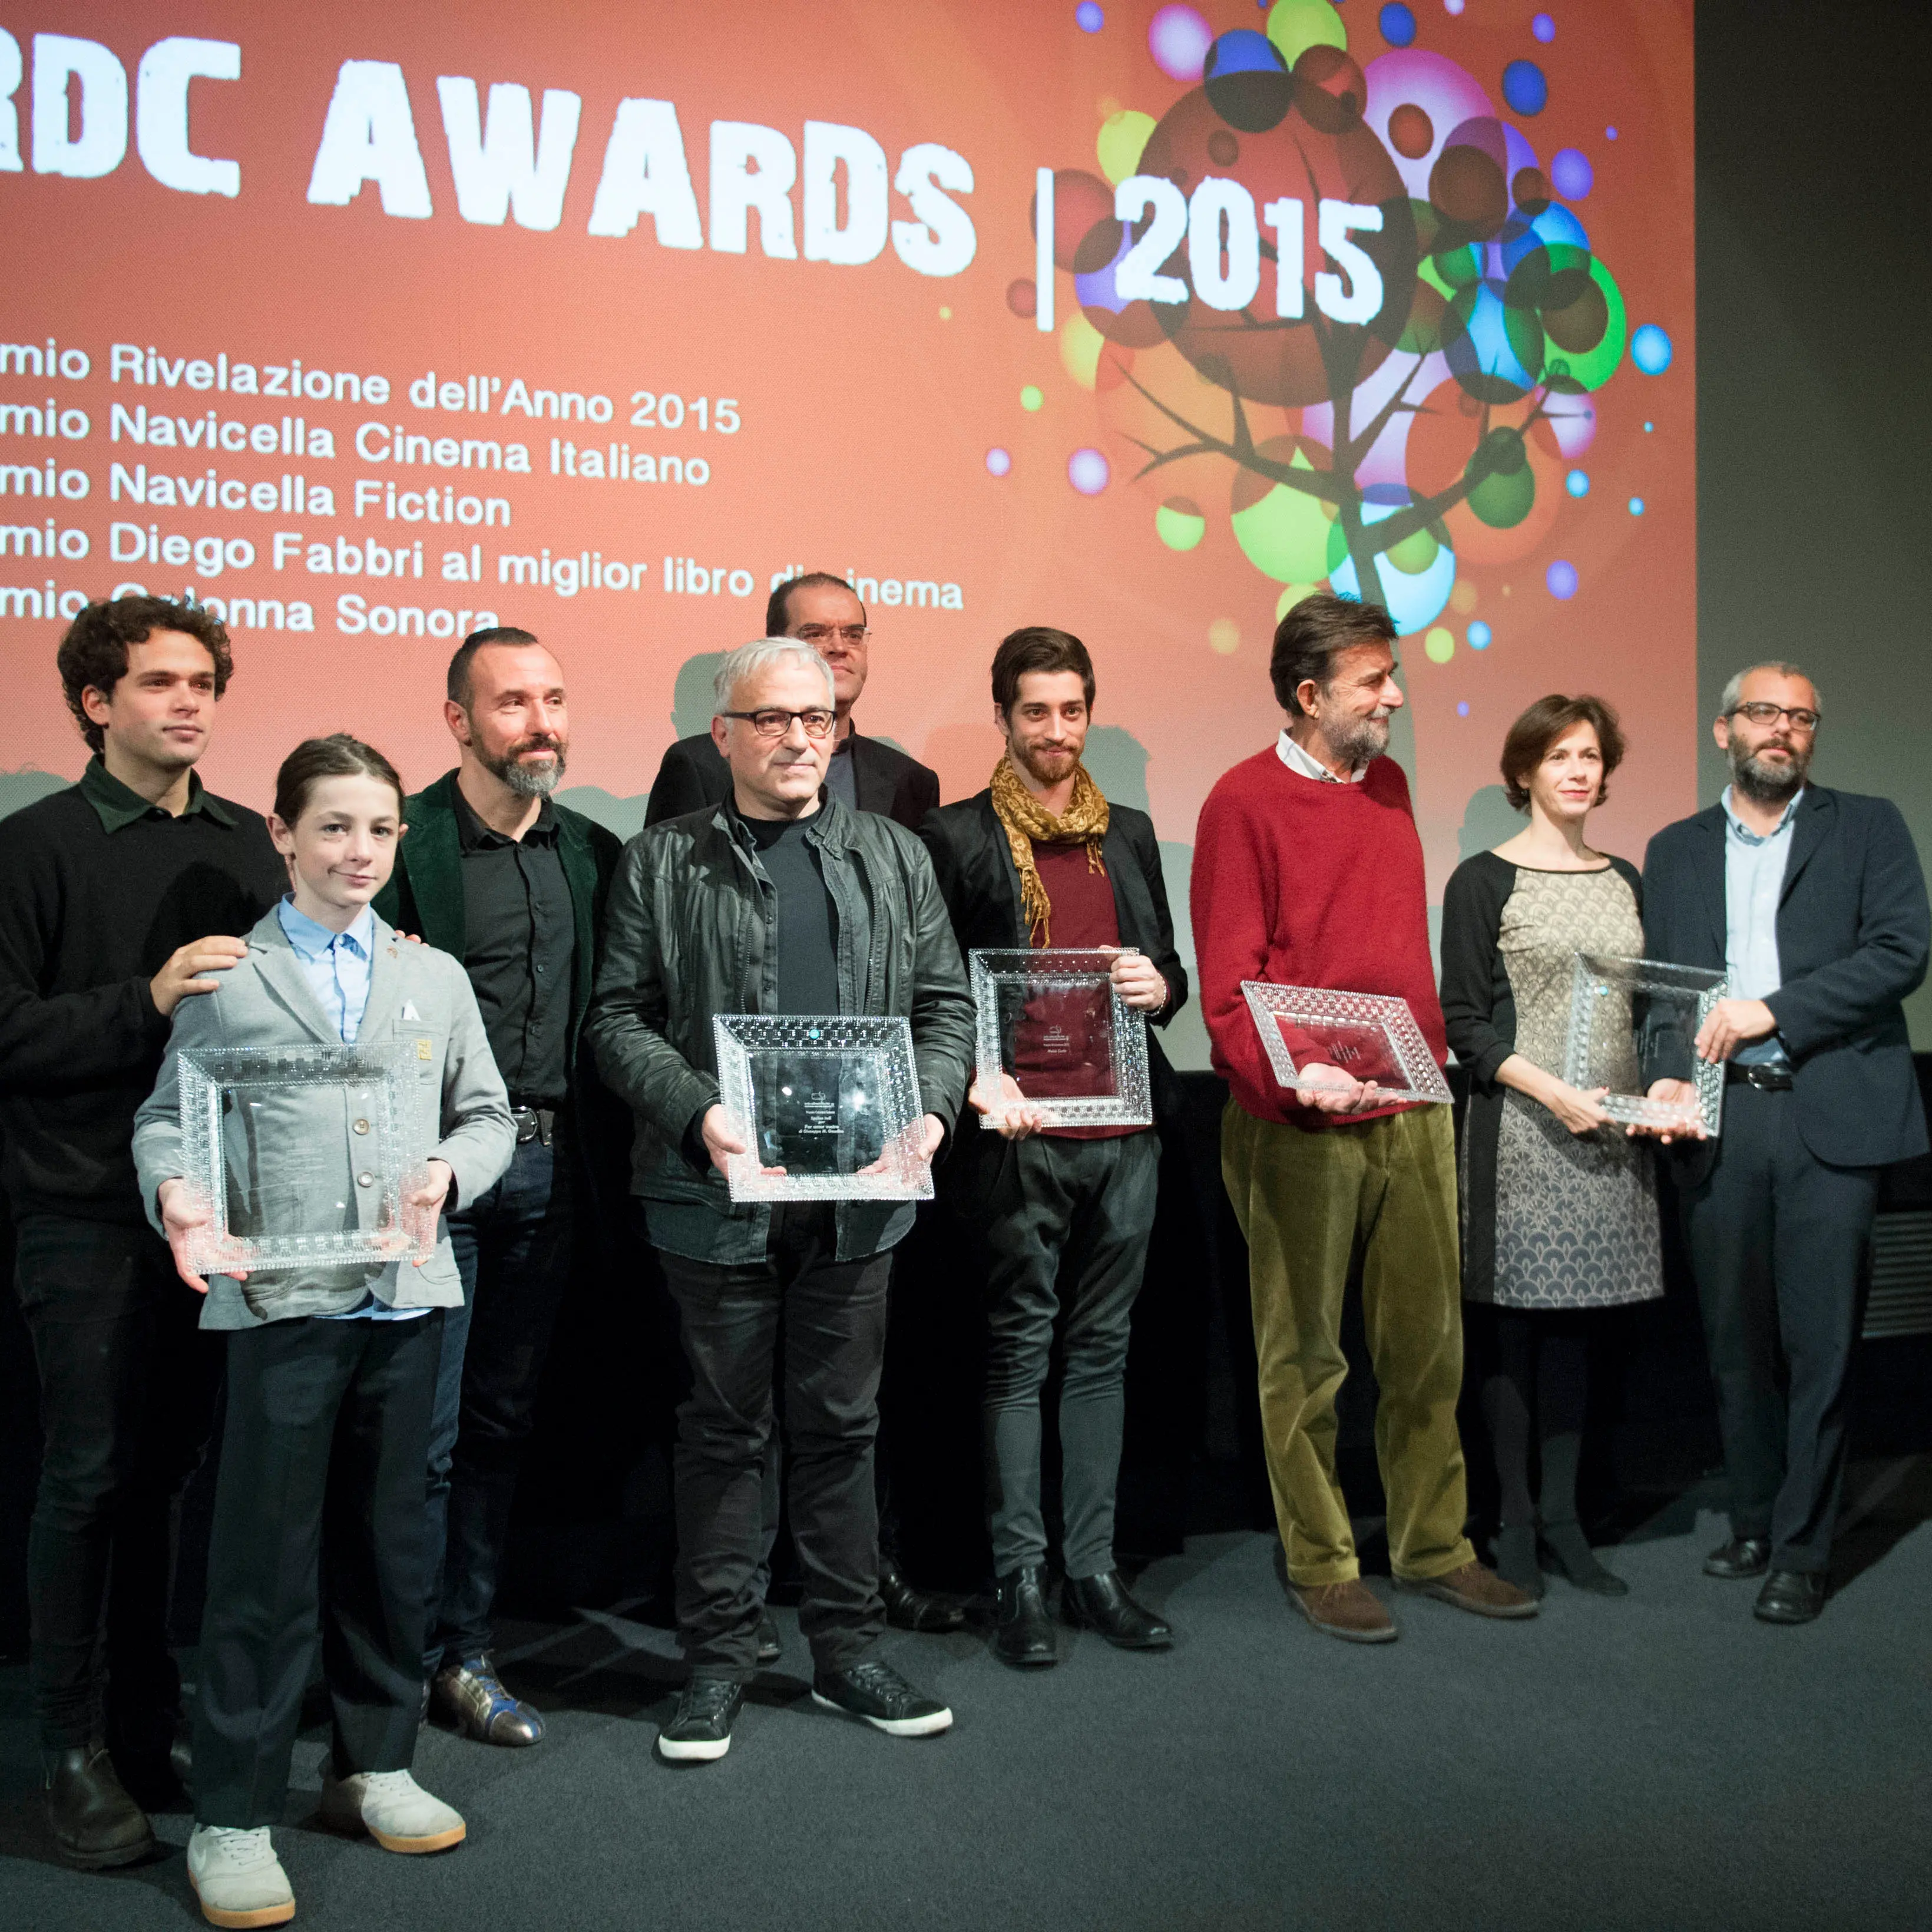 RdC Awards 2015